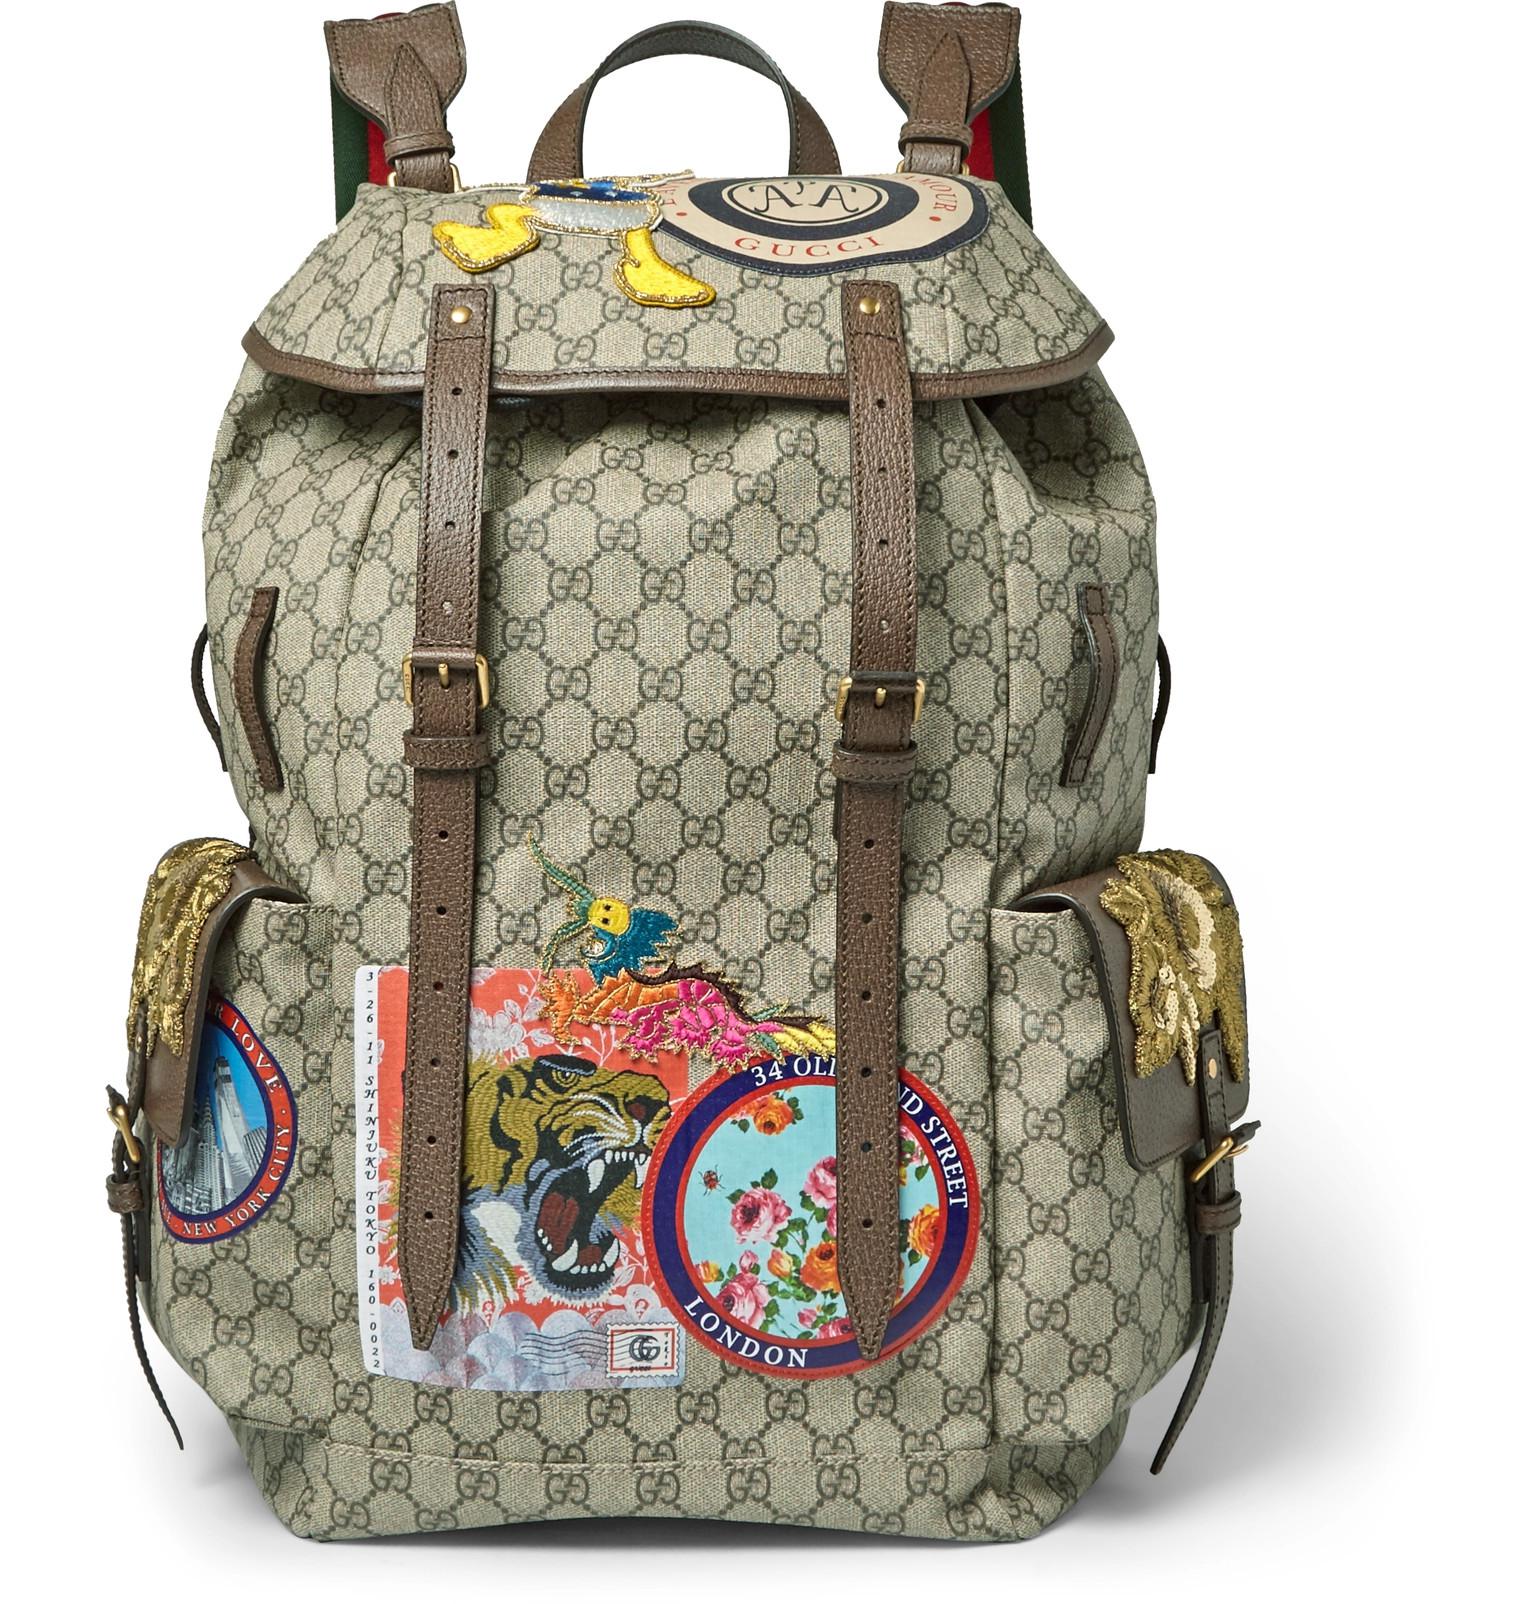 Gucci Leather-trimmed Appliquéd Monogrammed Coated-canvas Backpack in Brown for Men - Lyst